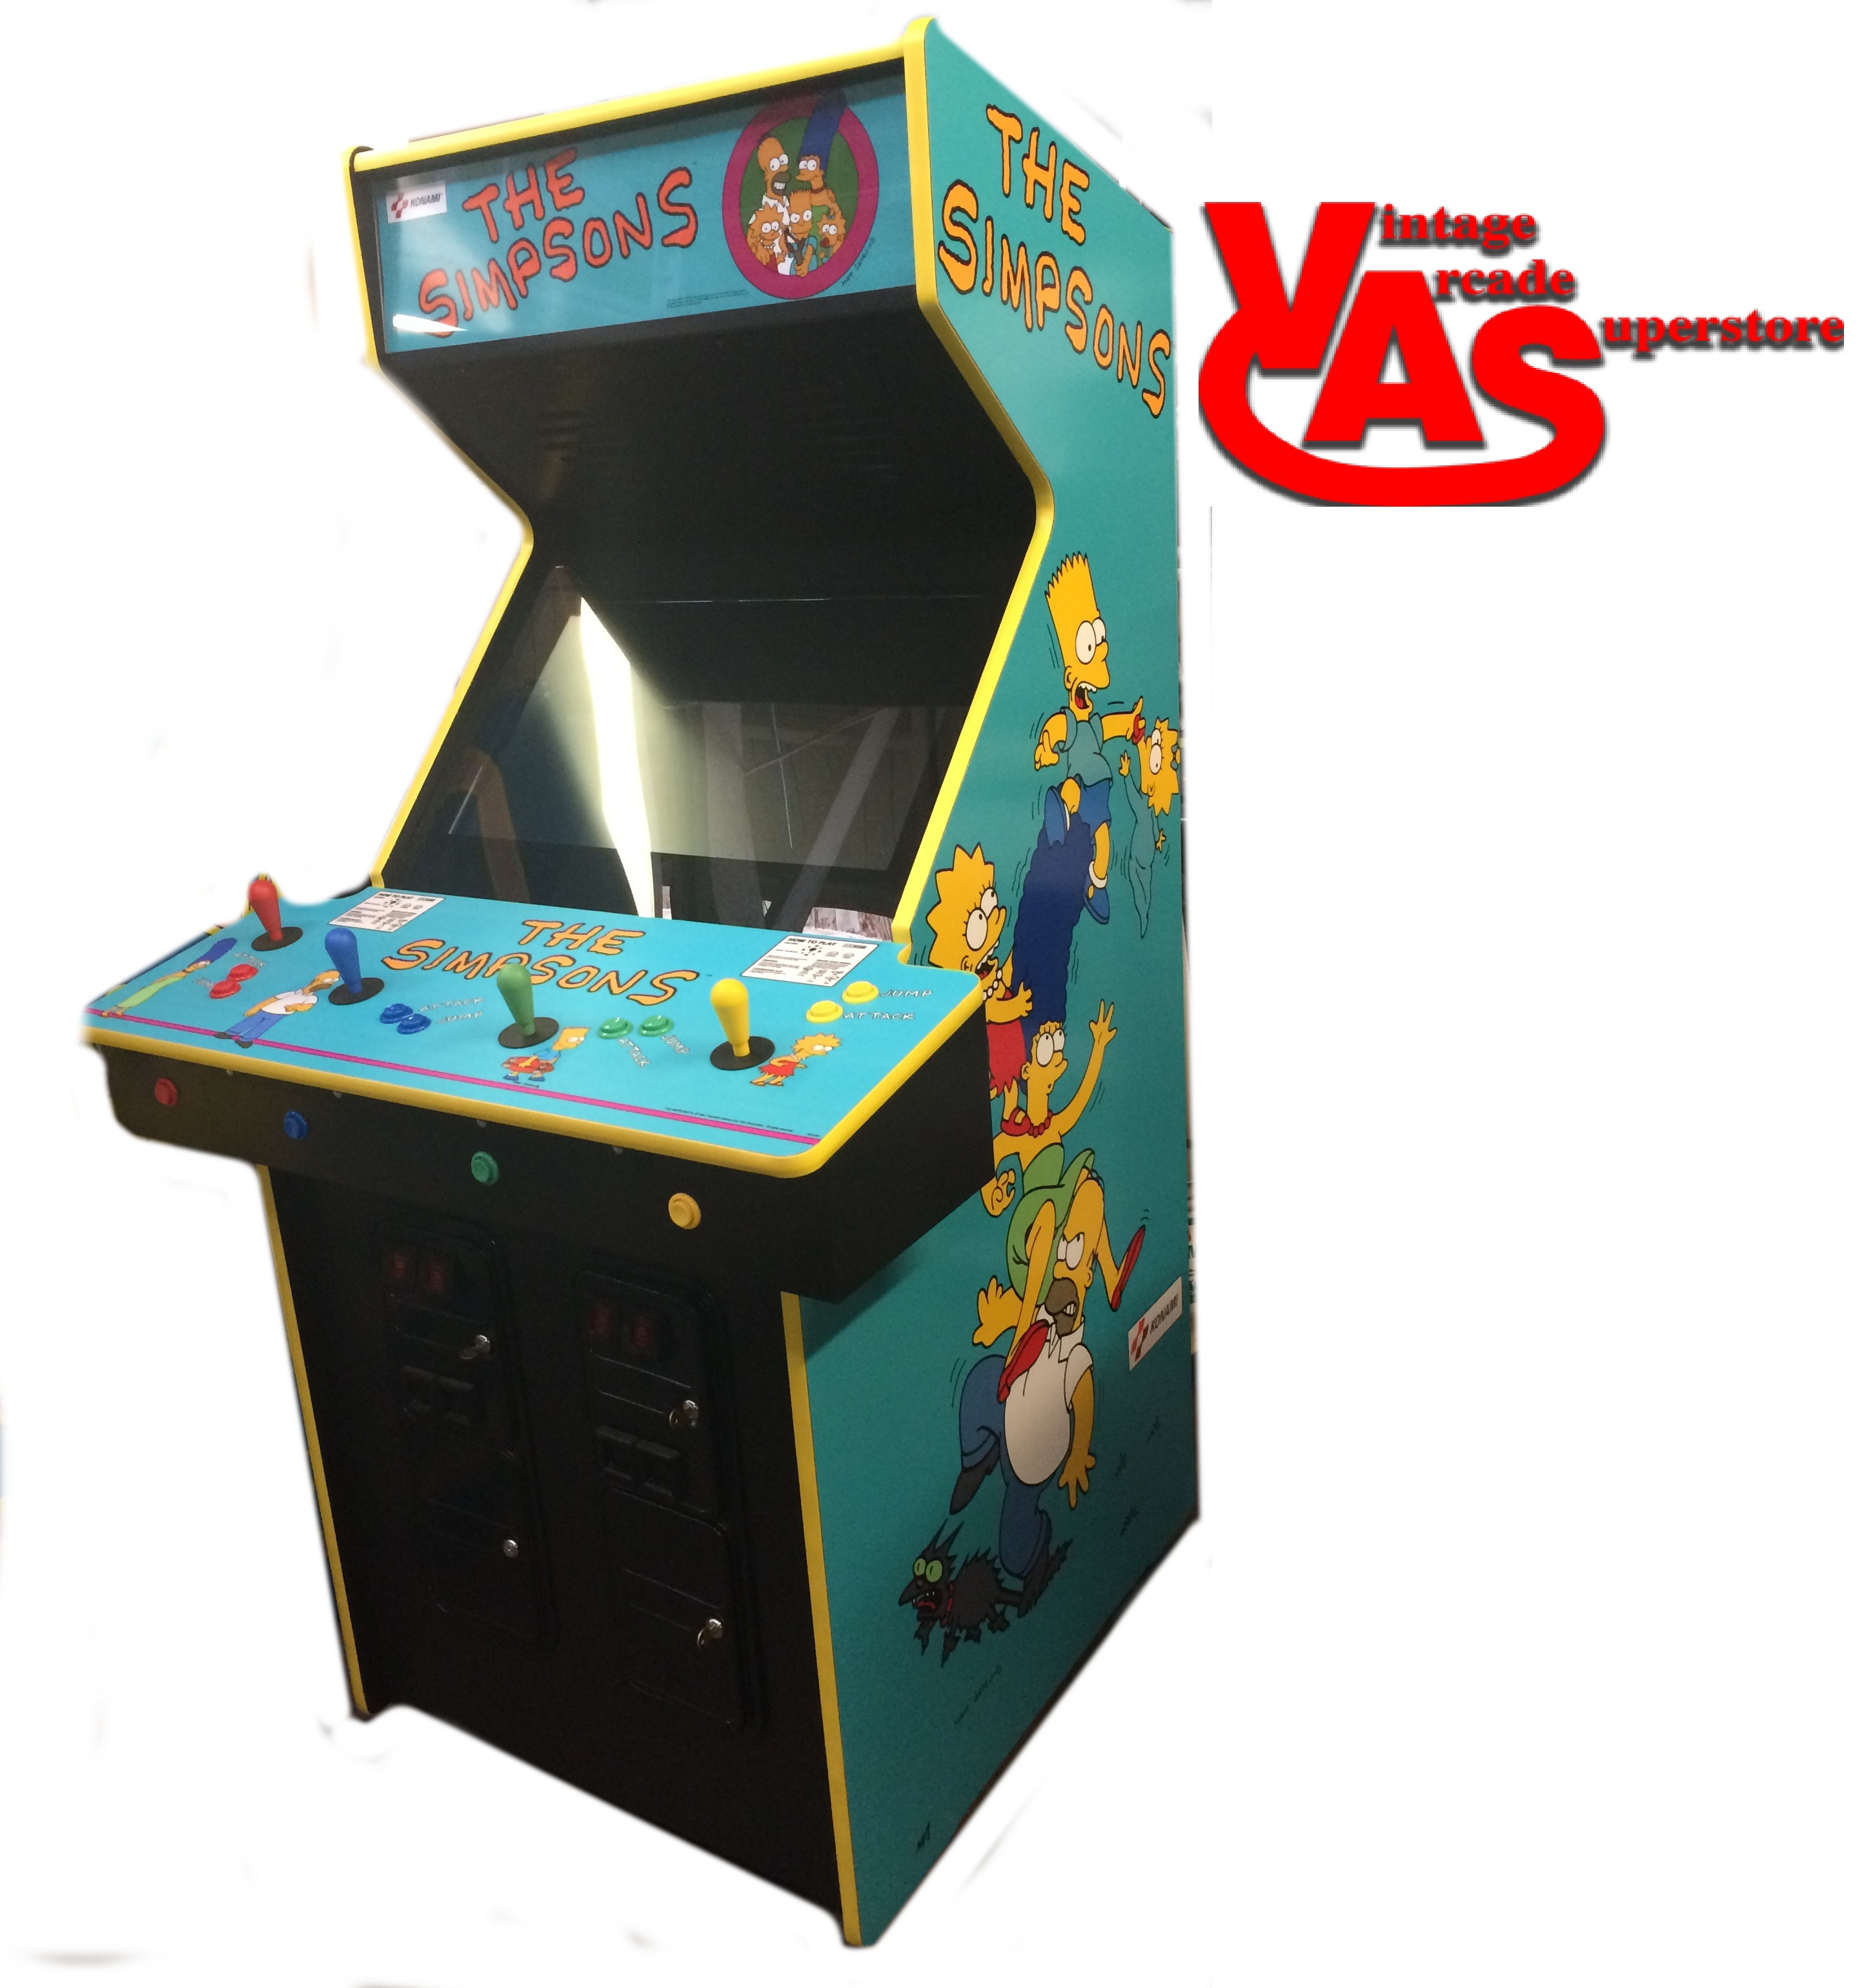 Simpsons Arcade Game For Sale Vintage Arcade Superstore